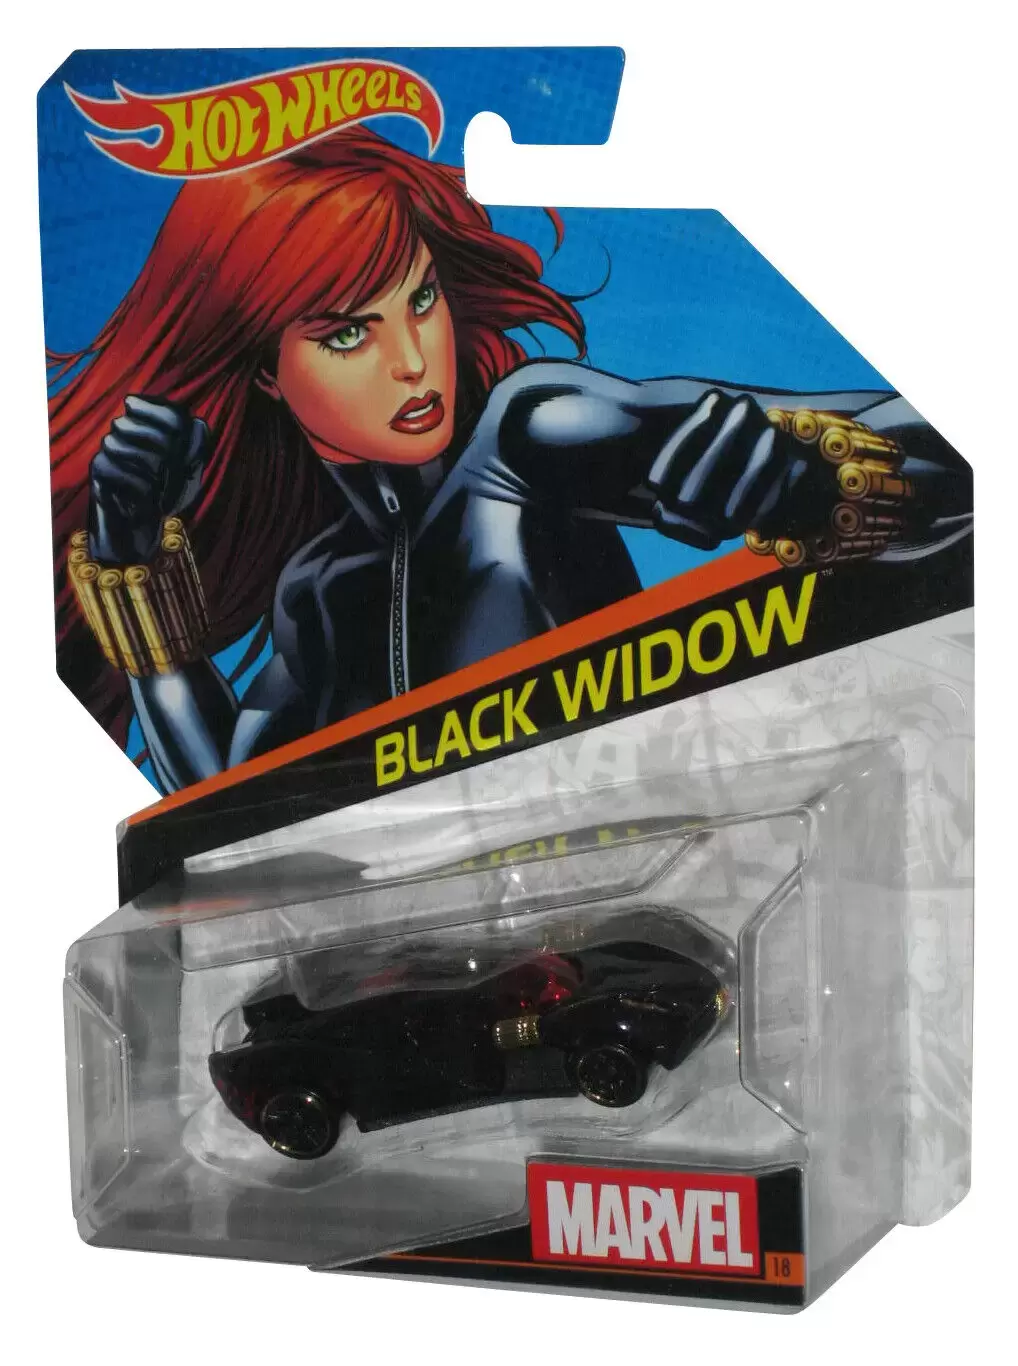 Marvel Character Cars - Black Widow